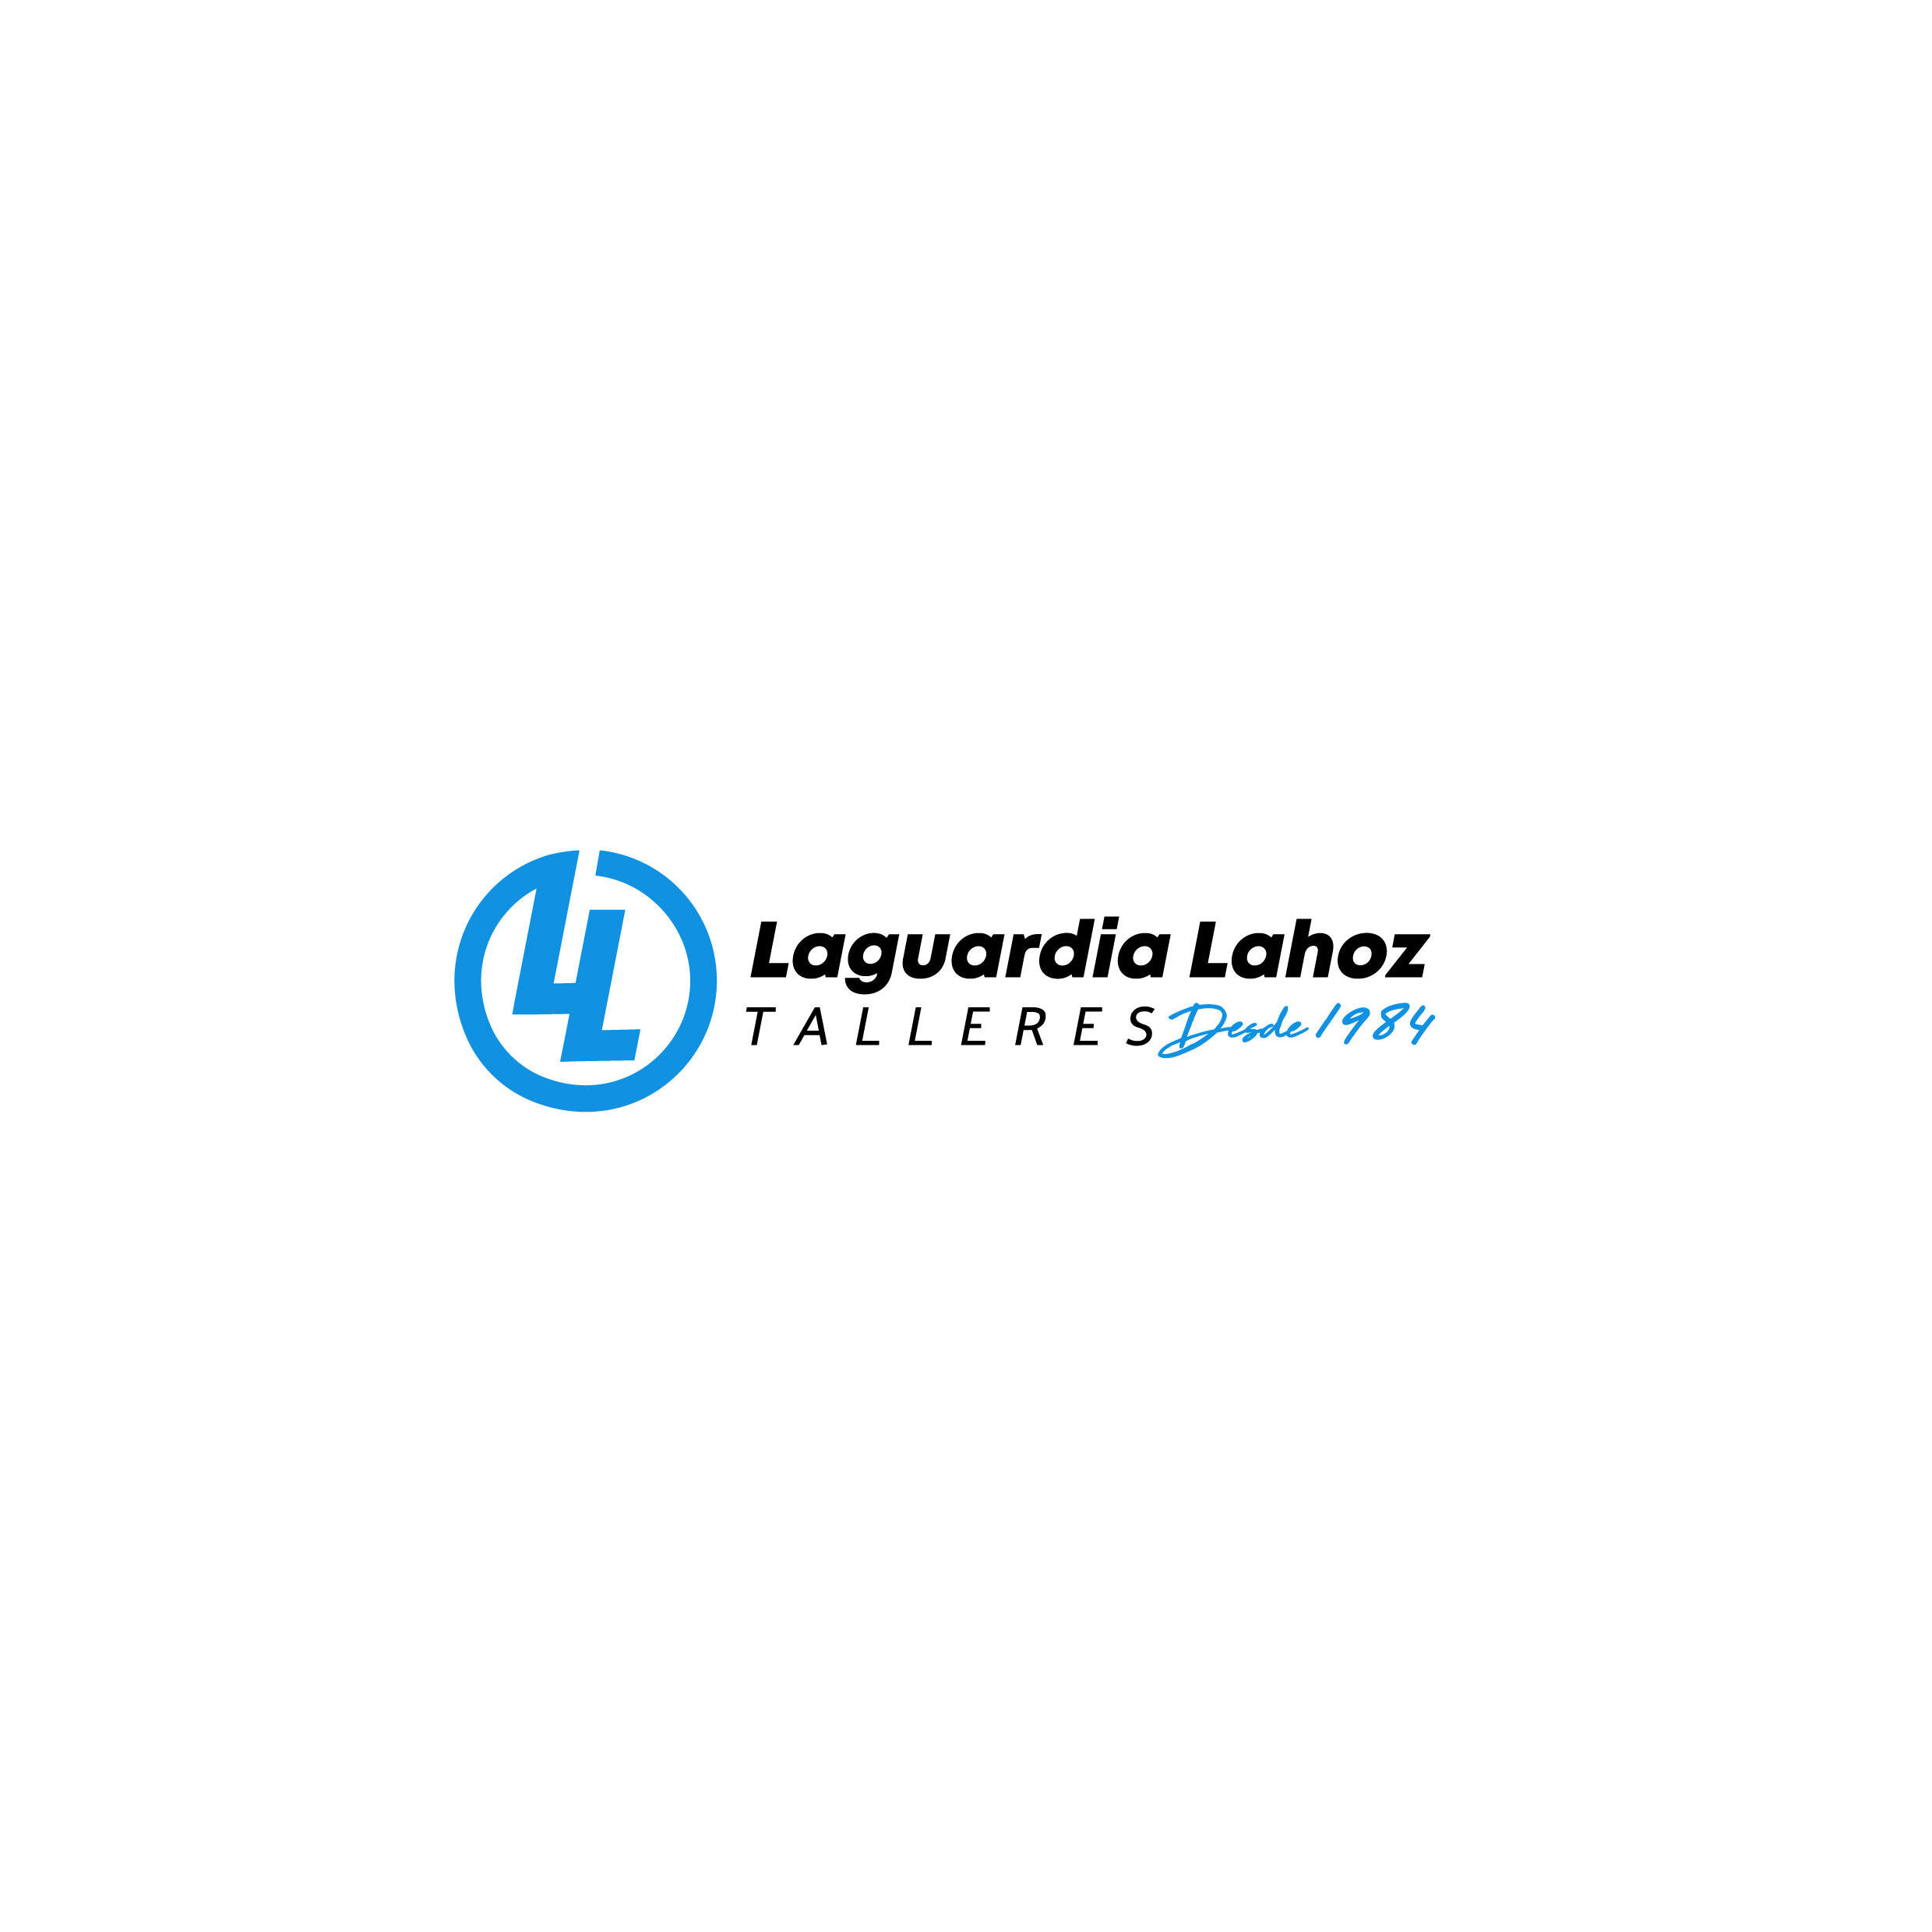 Talleres Aragoneses Lahoz Laguardia Logo